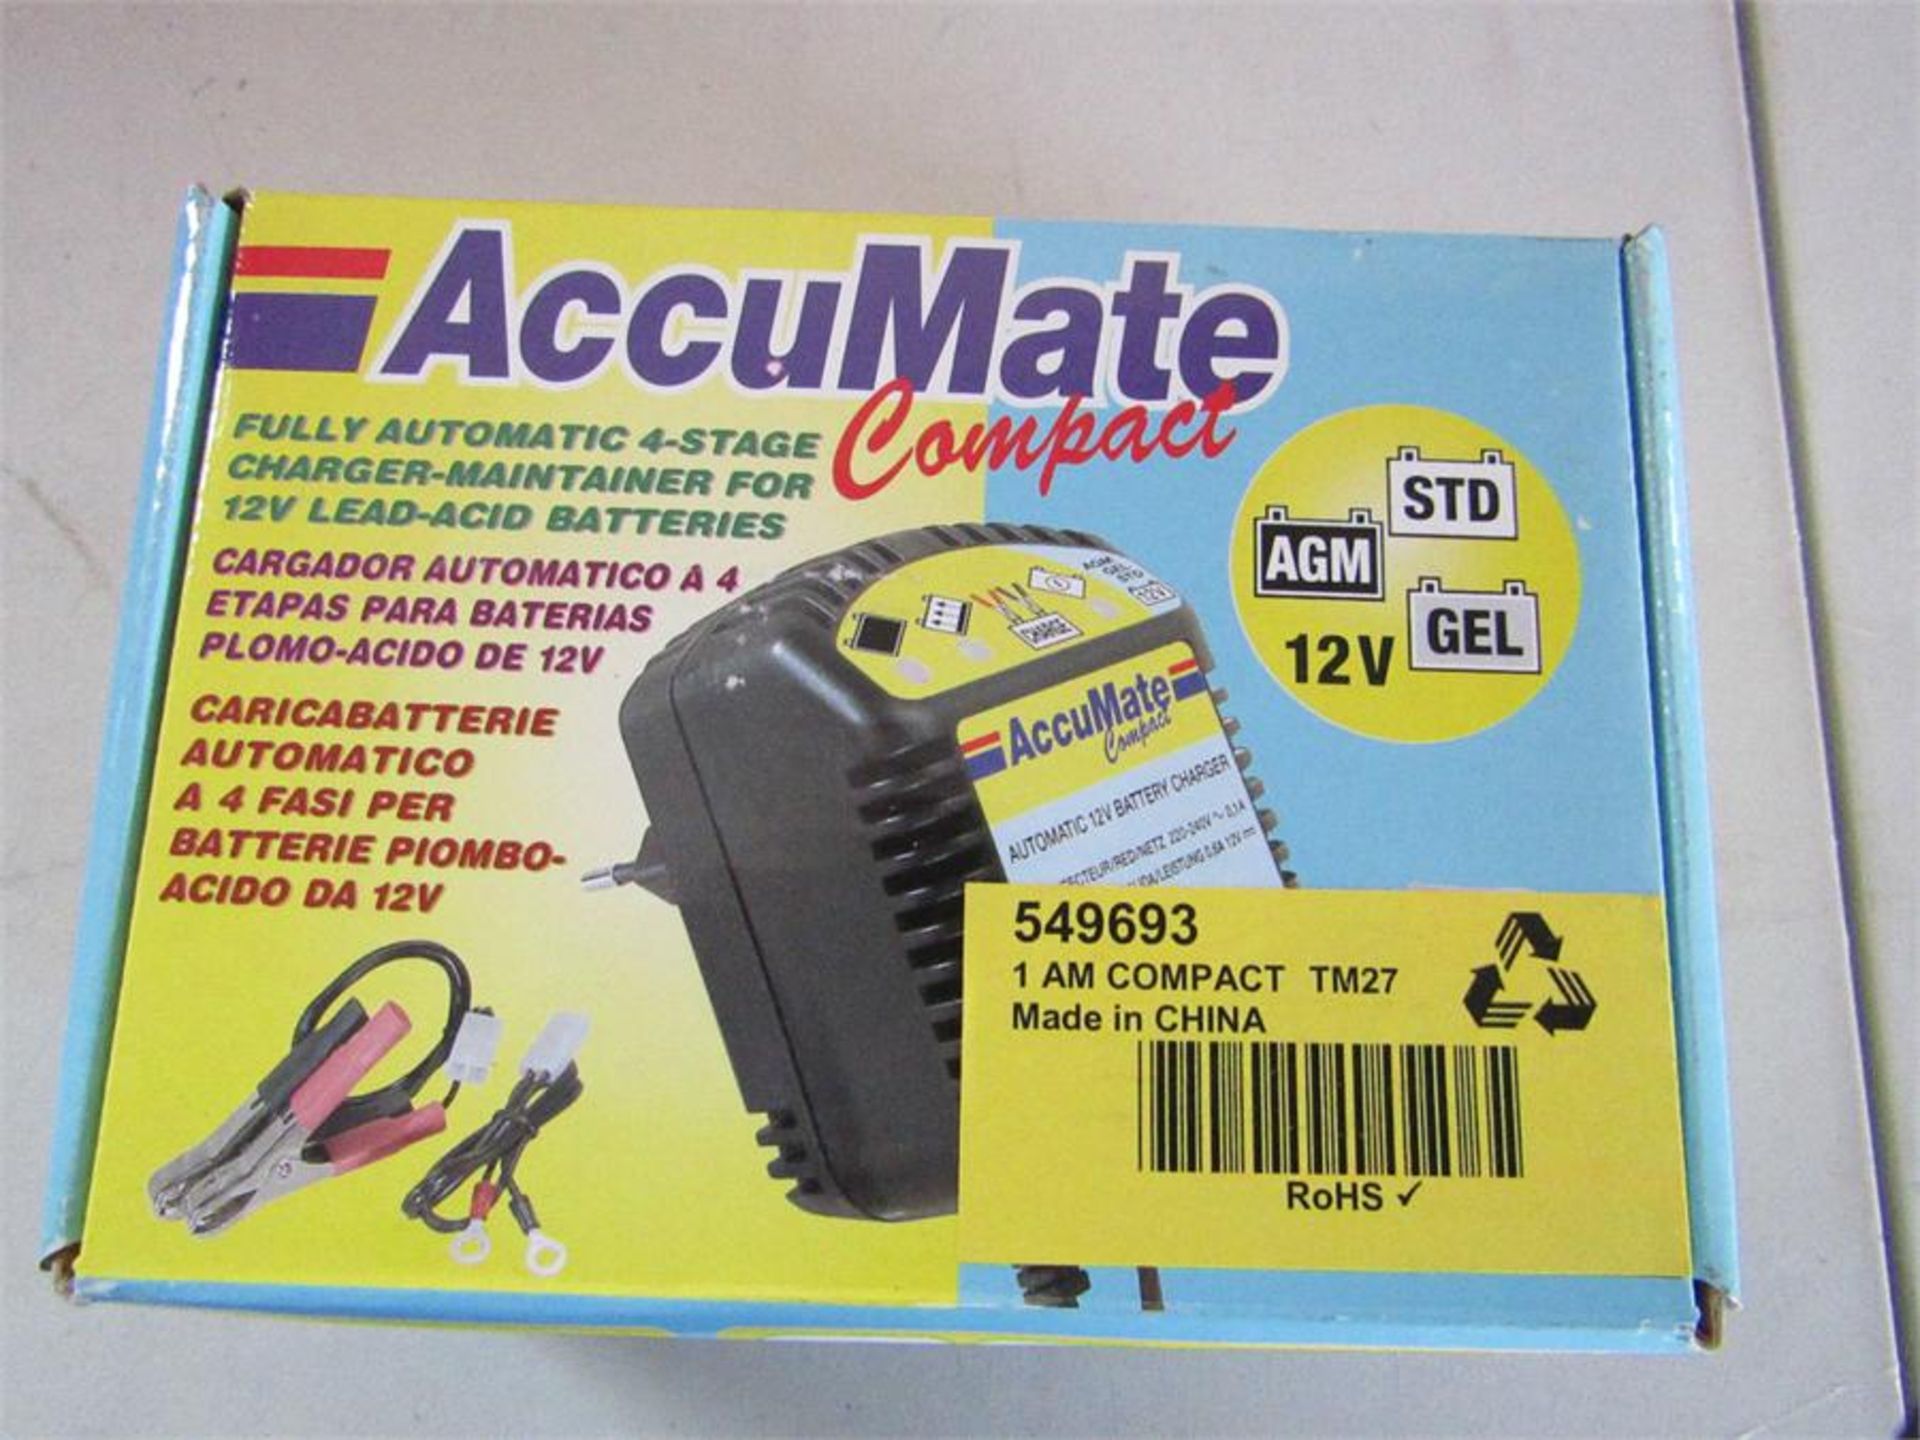 TecMate 12V @ 0.6A Battery Charger Euro Plug - Image 2 of 2